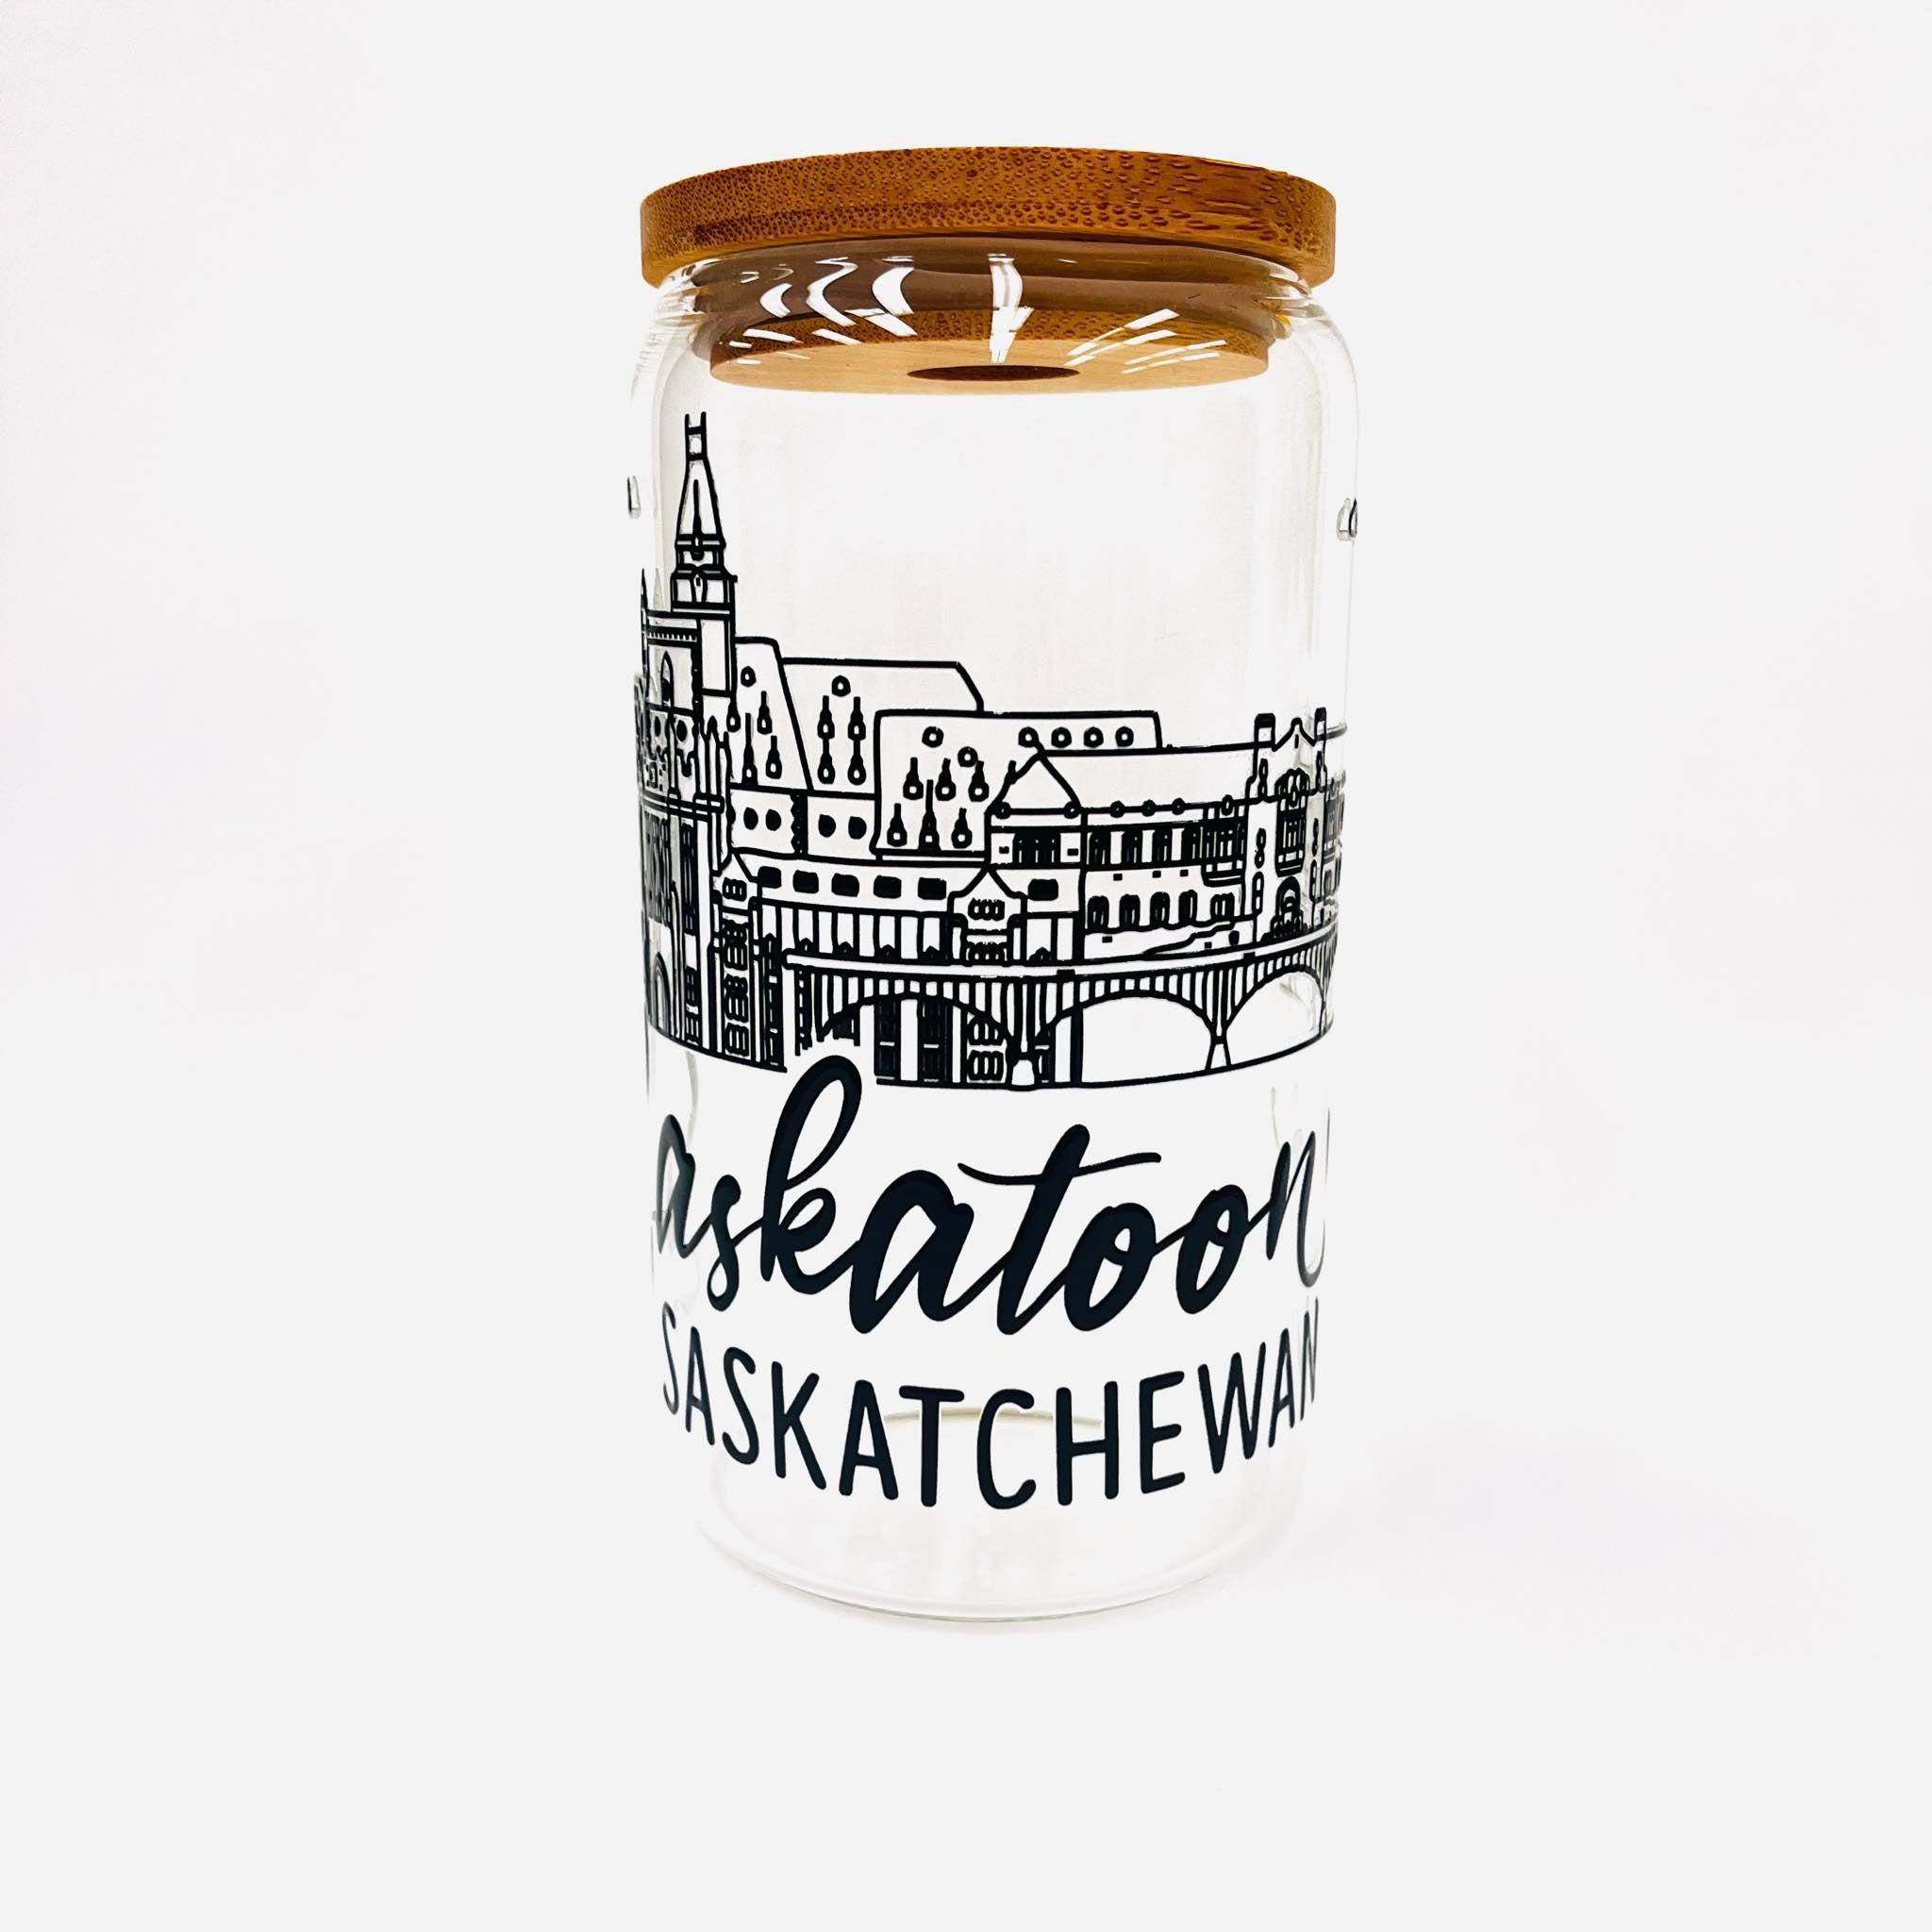 Saskatoon Saskatchewan Bess Libbey Glass